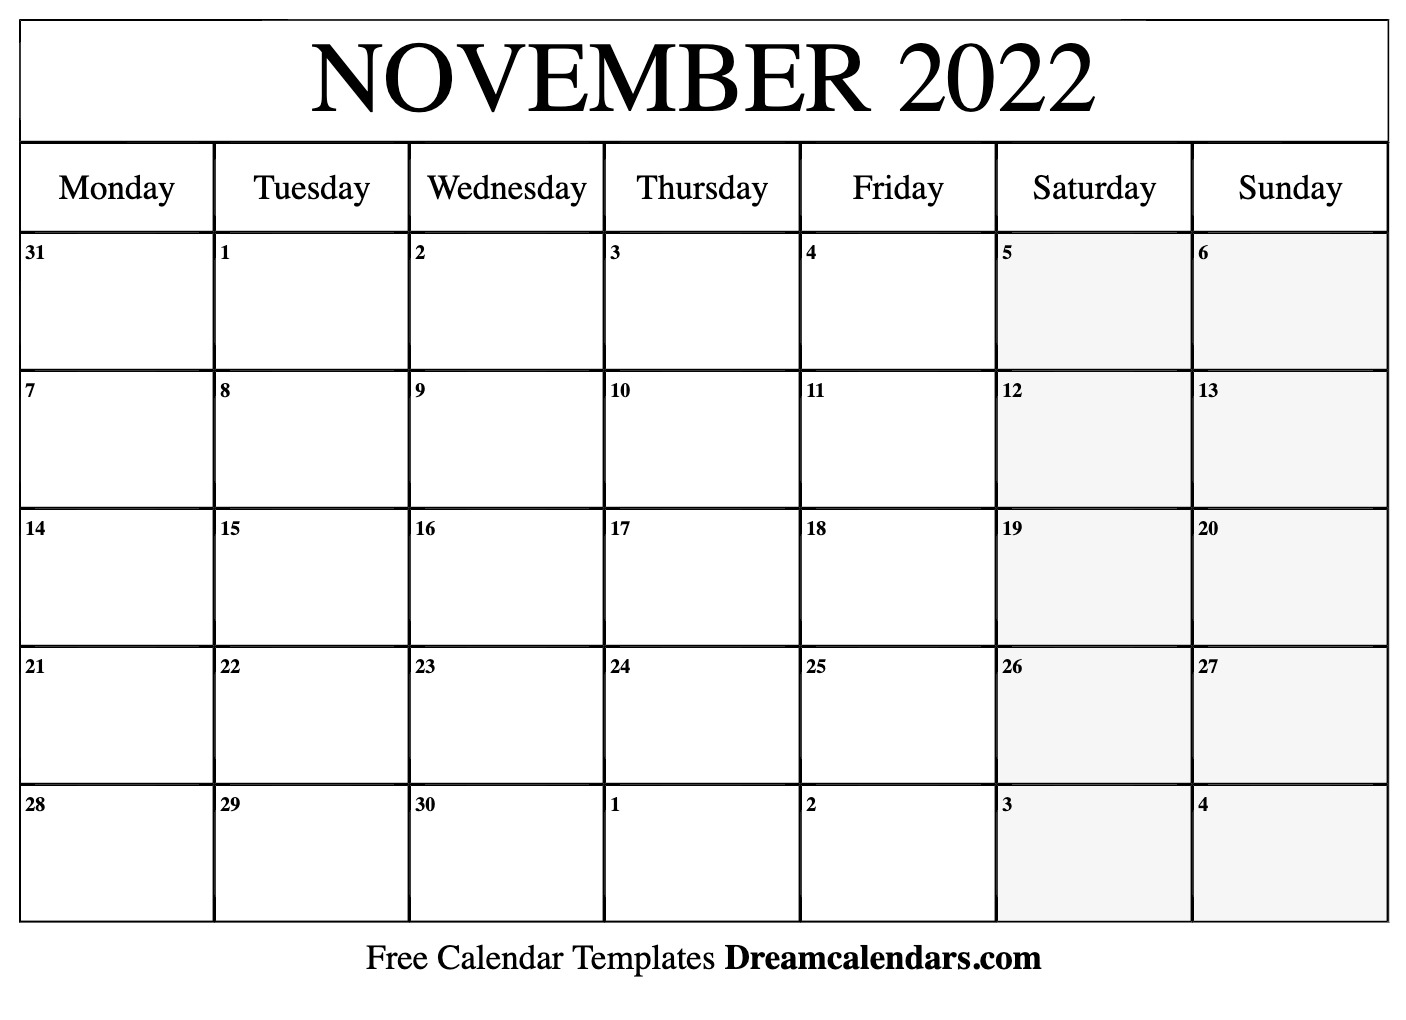 november-2022-calendar-printable-free-printable-calendar-monthly